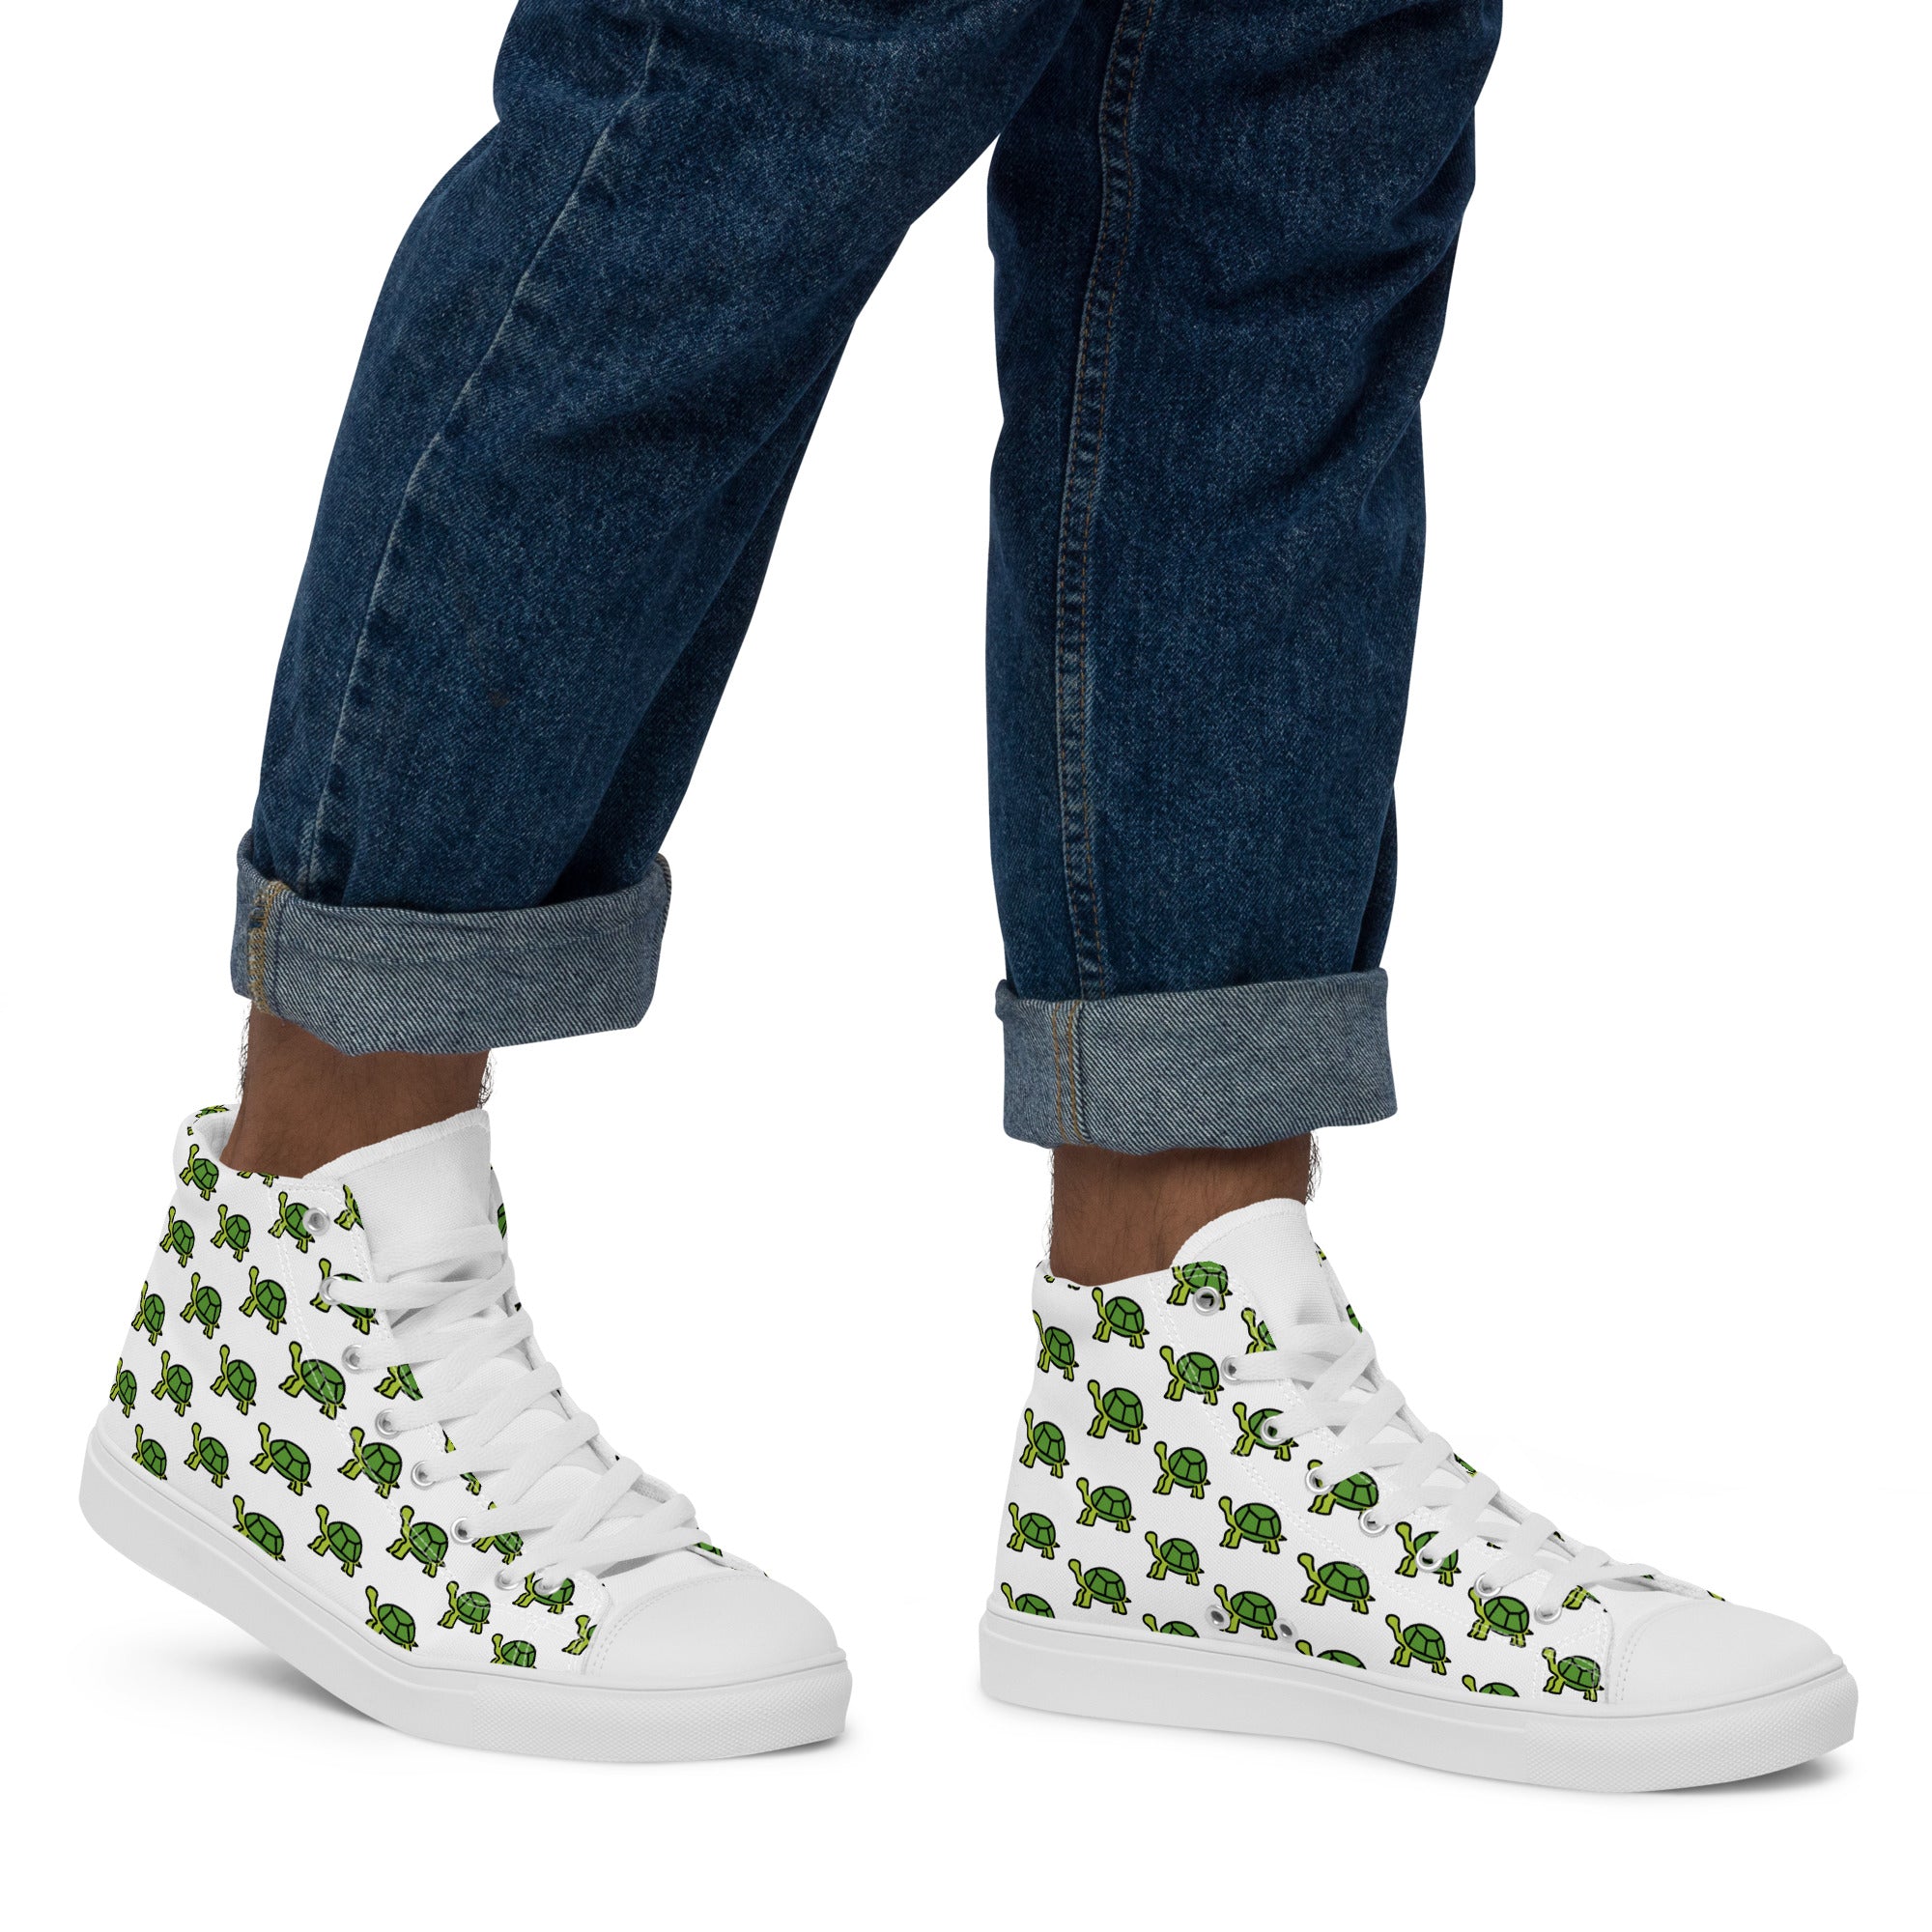 Chitelli's Turtle Emoji Men's High Top Sneakers